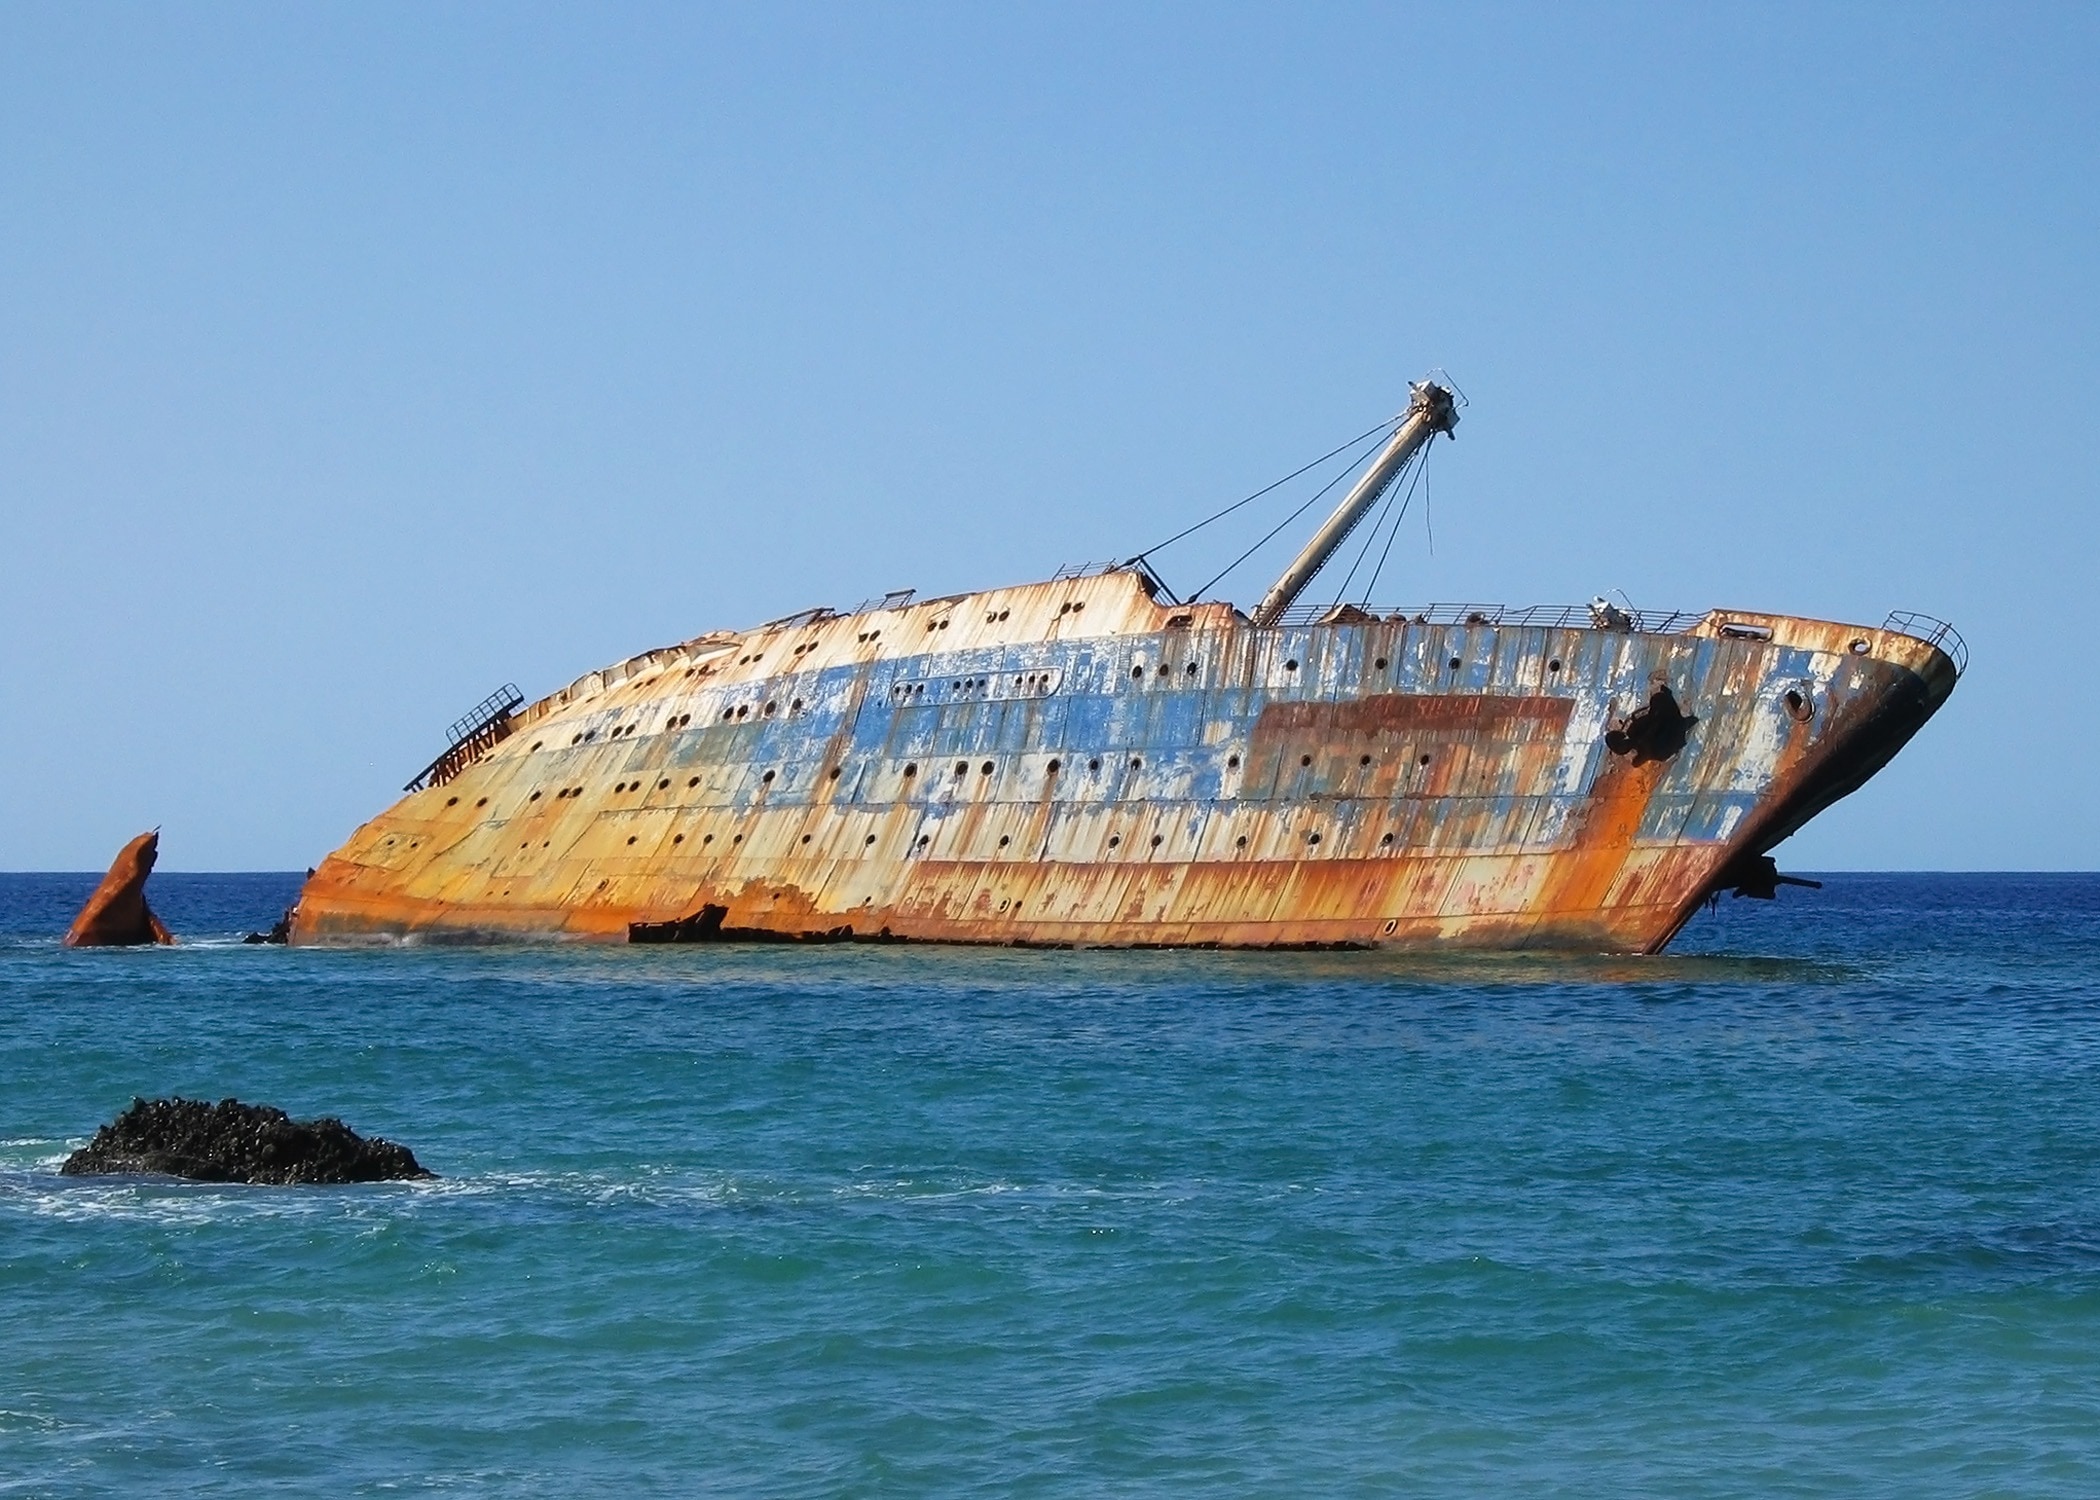 Ship, Wrecked, Canary Islands, Shipwreck, sea, blue